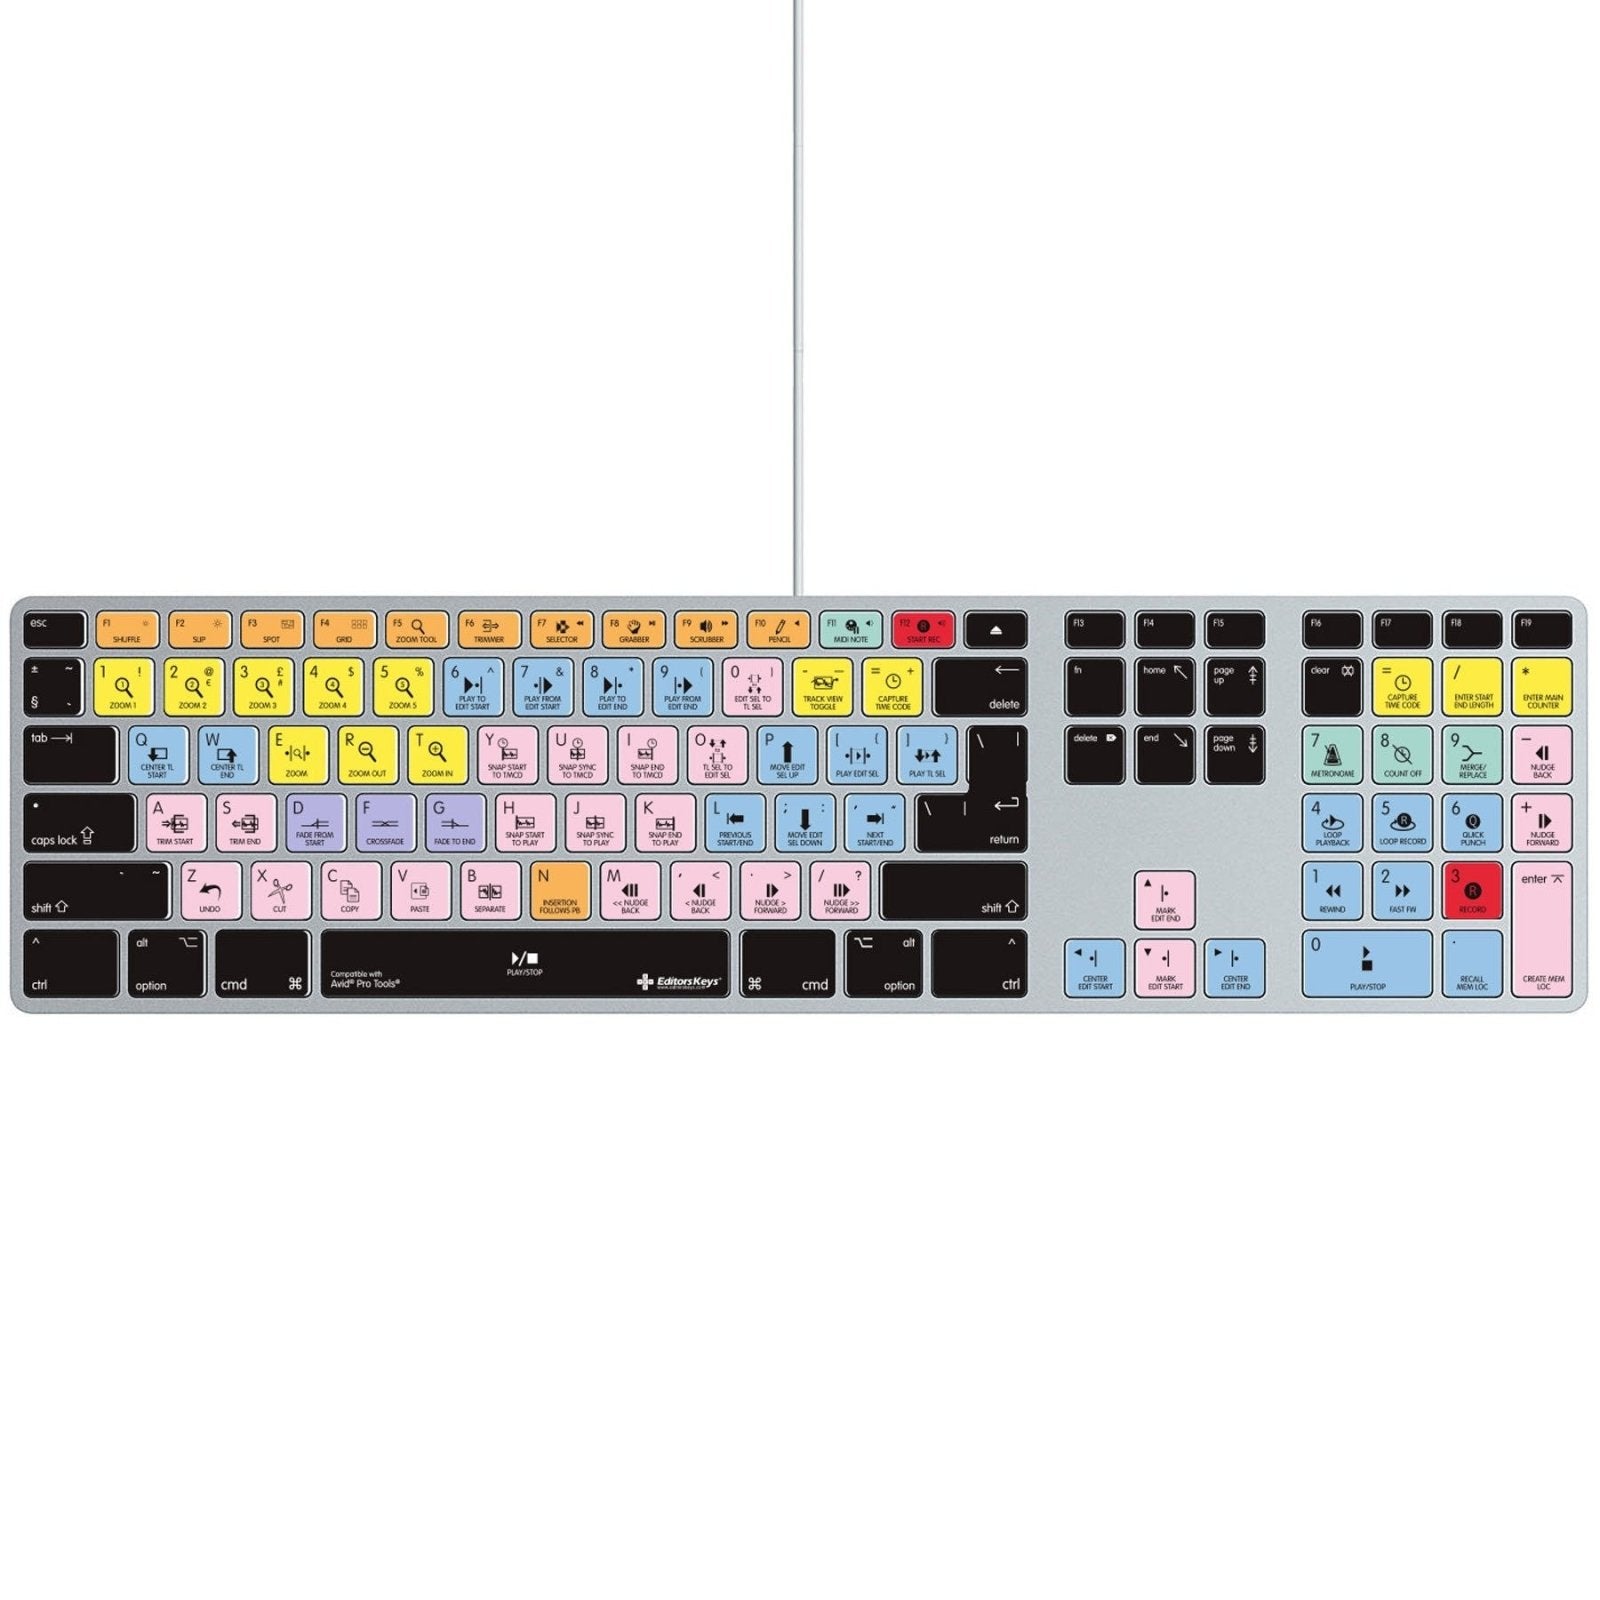 Avid Pro Tools Keyboard Covers for MacBook and iMac - Editors Keys